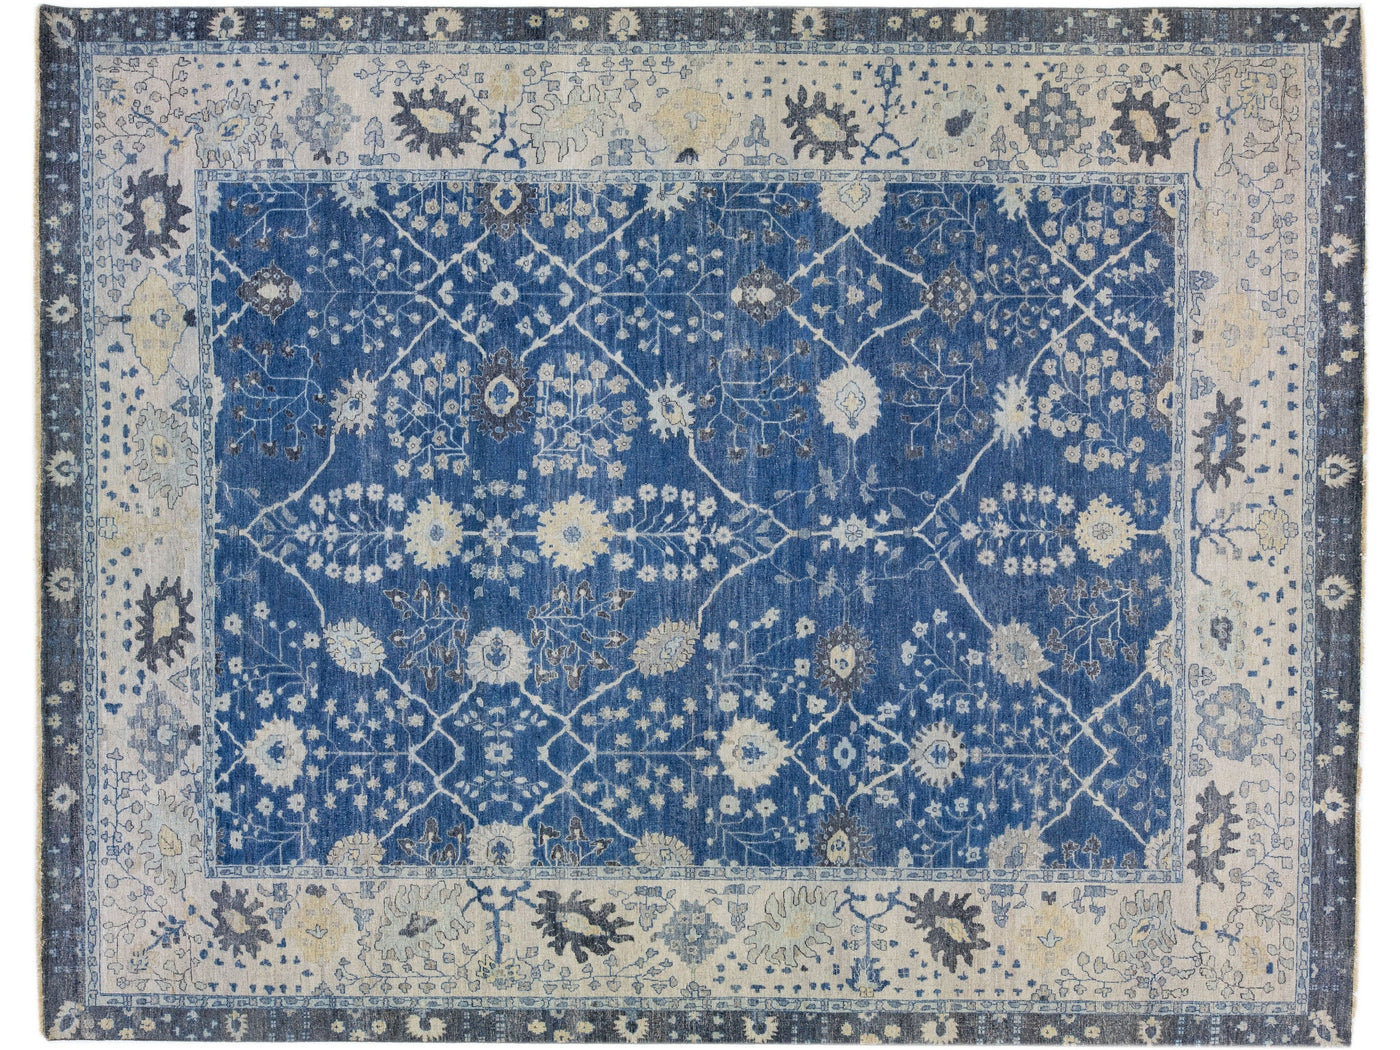 Apadana's Artisan Collection Blue Handmade Floral Indian Wool Rug